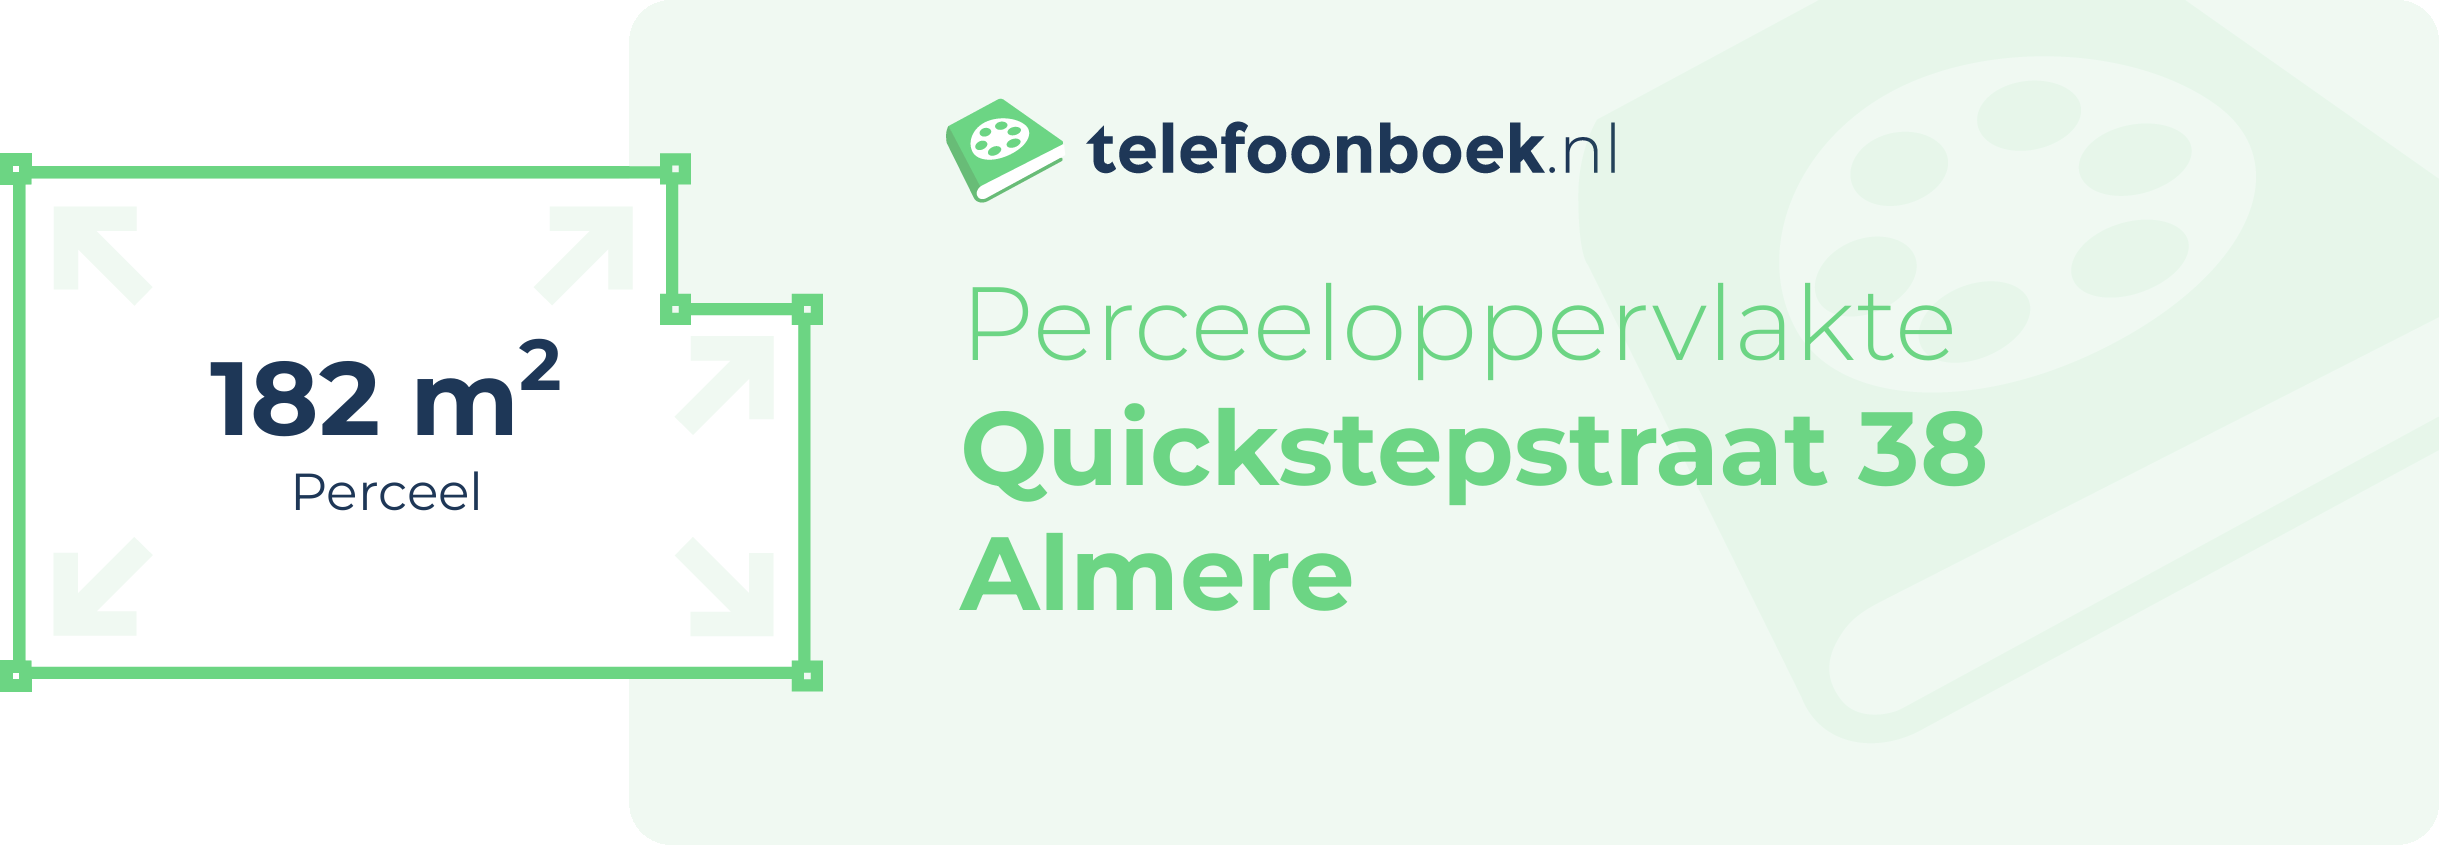 Perceeloppervlakte Quickstepstraat 38 Almere